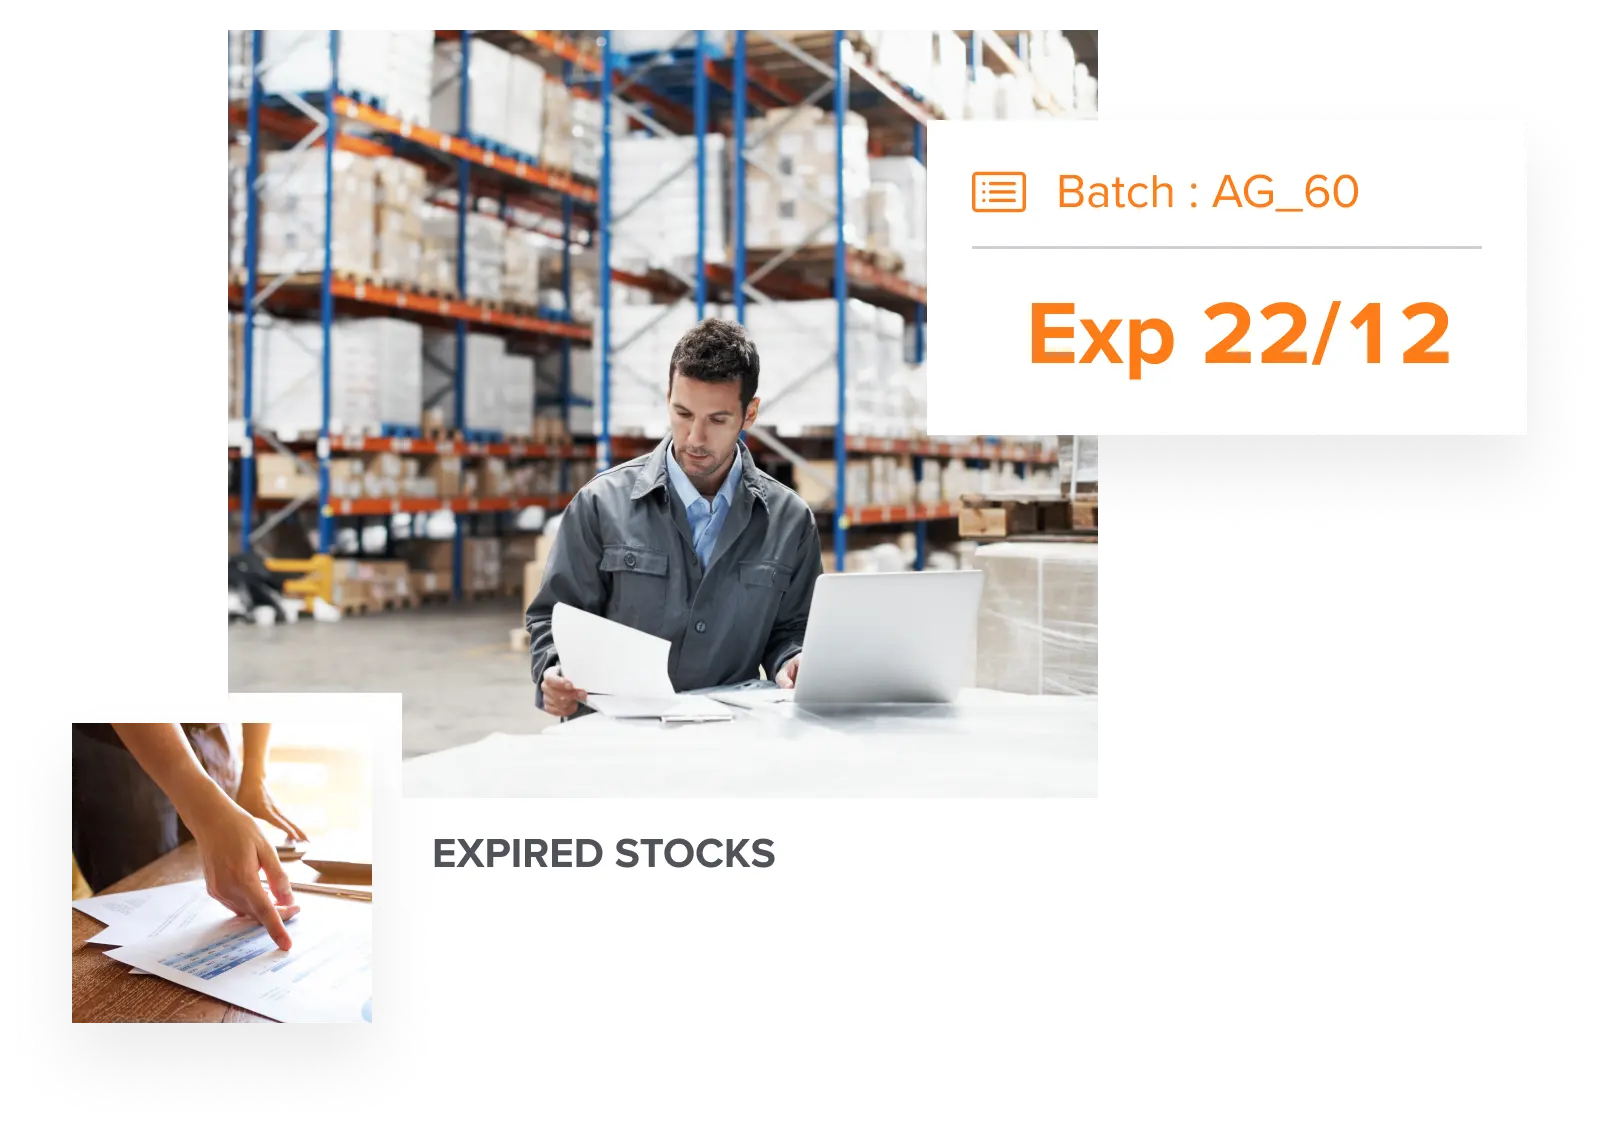 distributo-fmcg-stockist-track-inventory-&-expired-goods